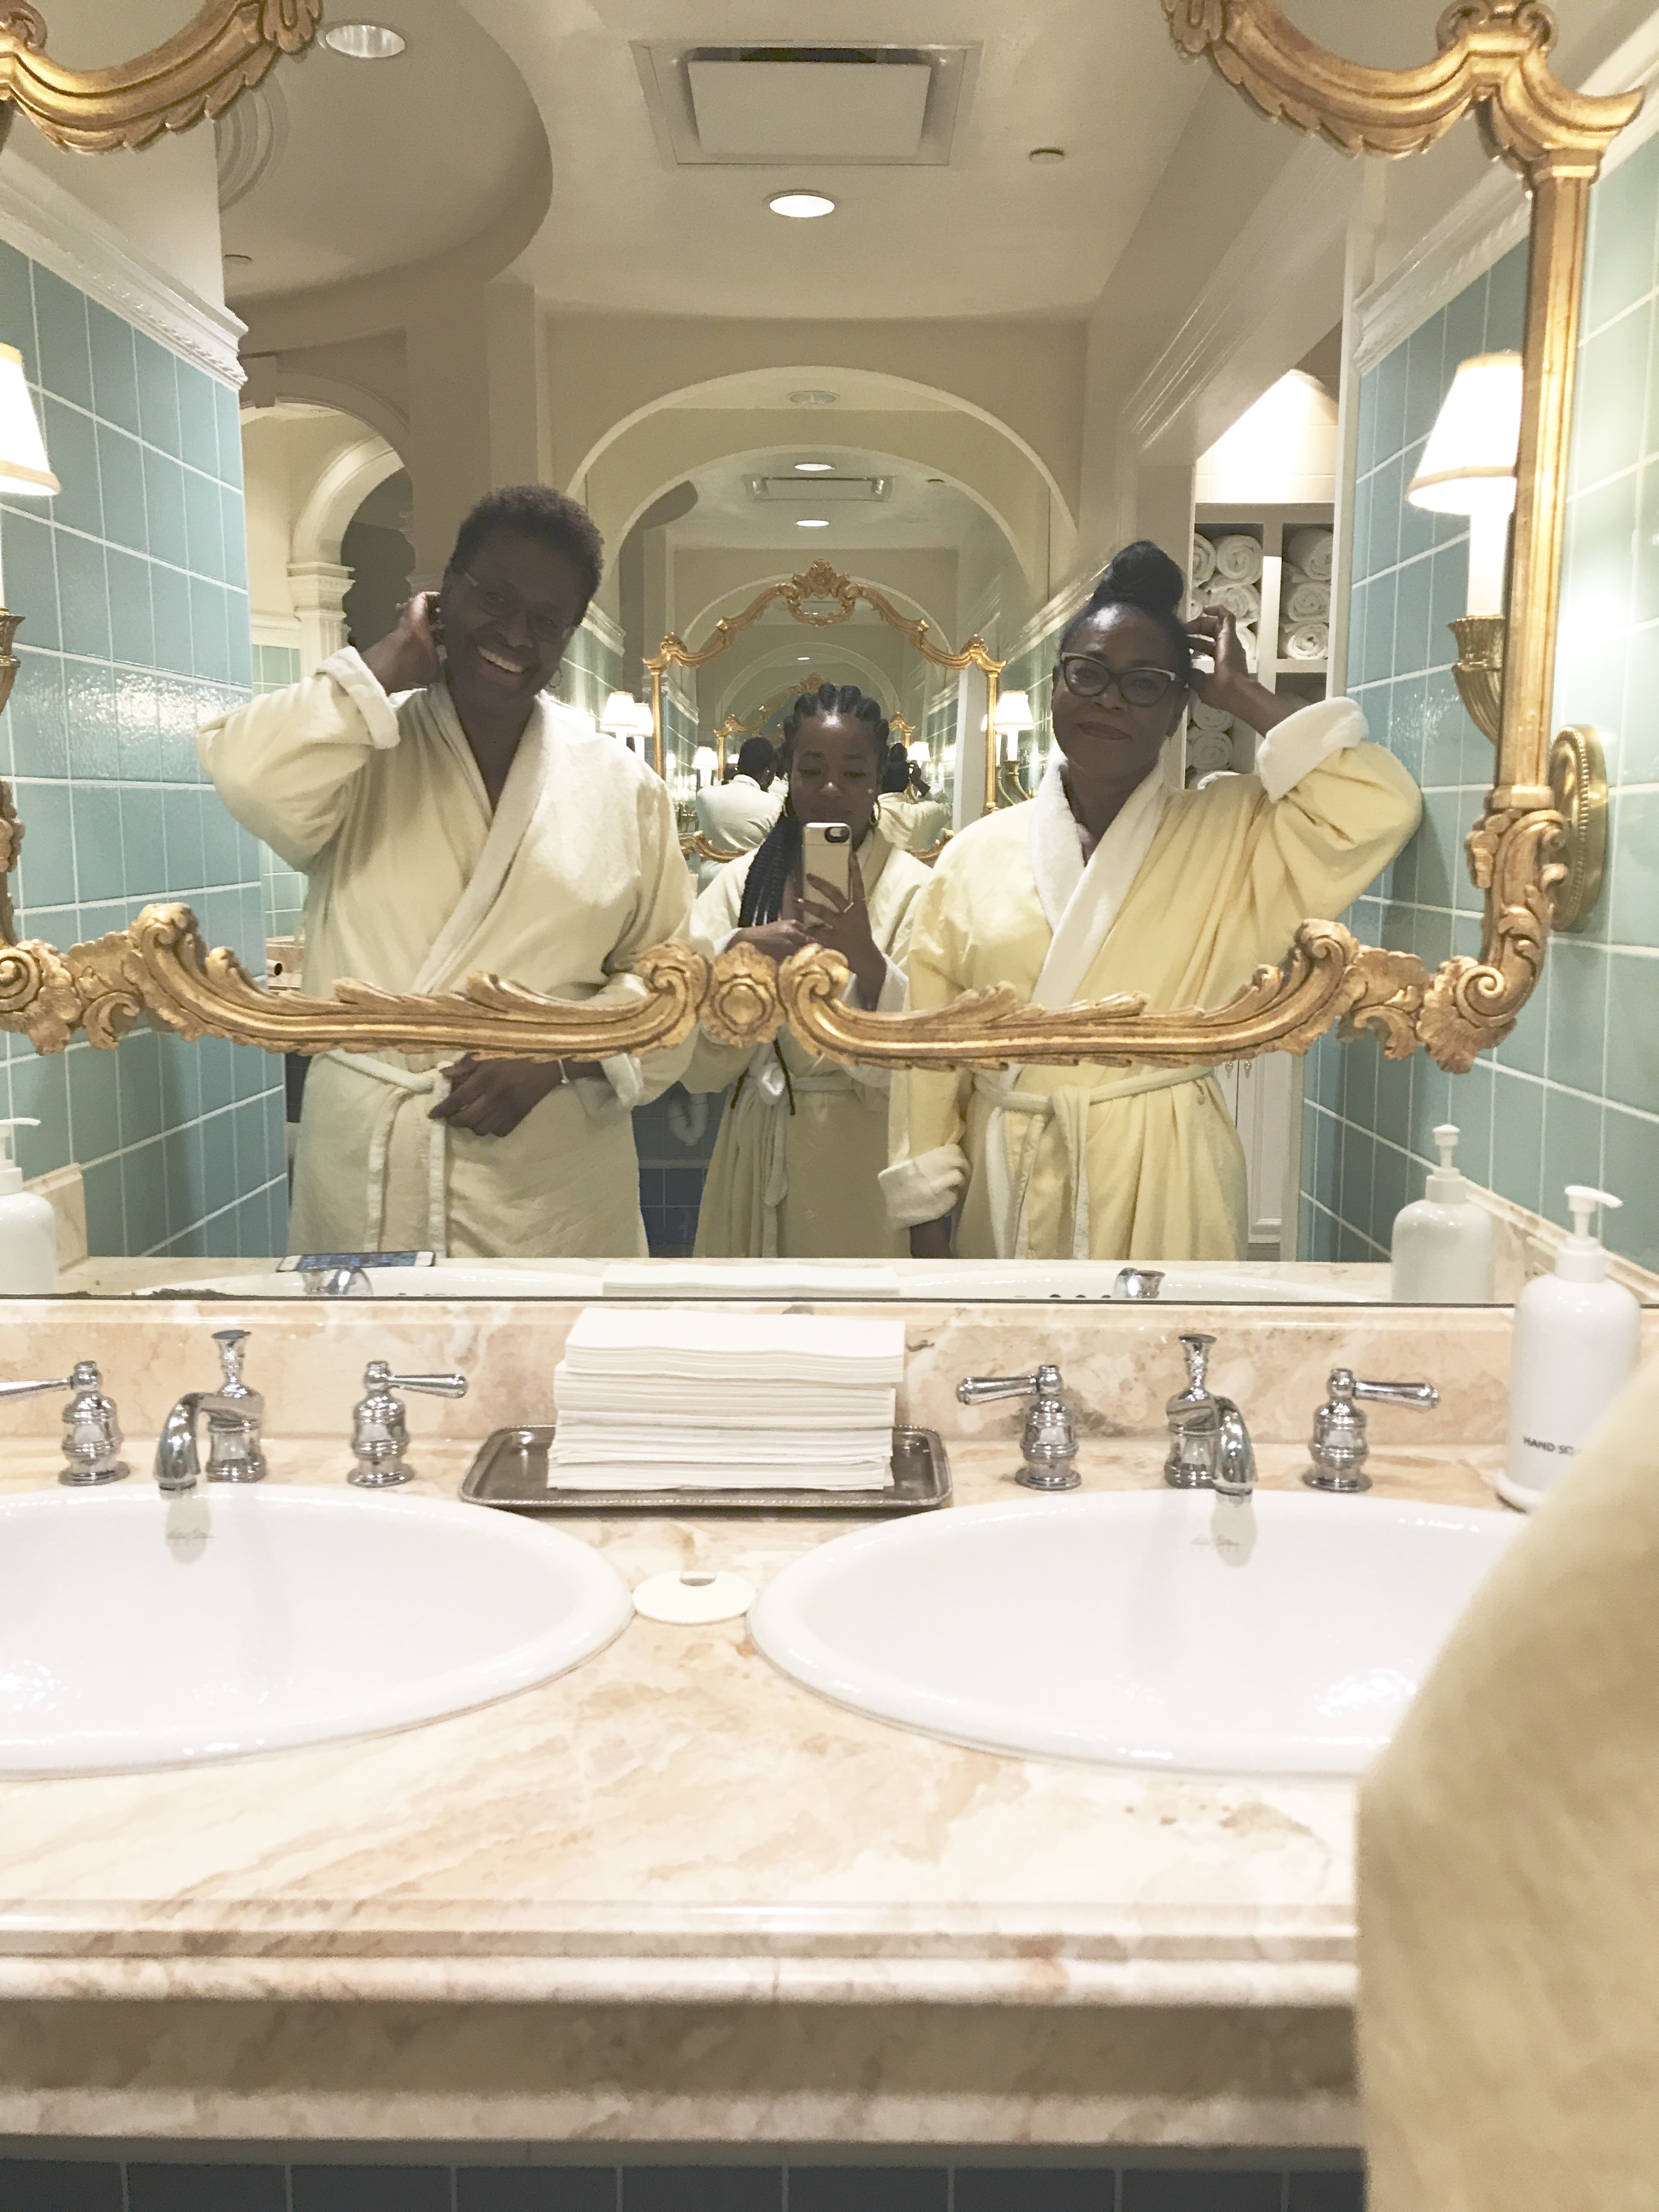 The Spa at the Hotel Hershey Bathroom Selfies